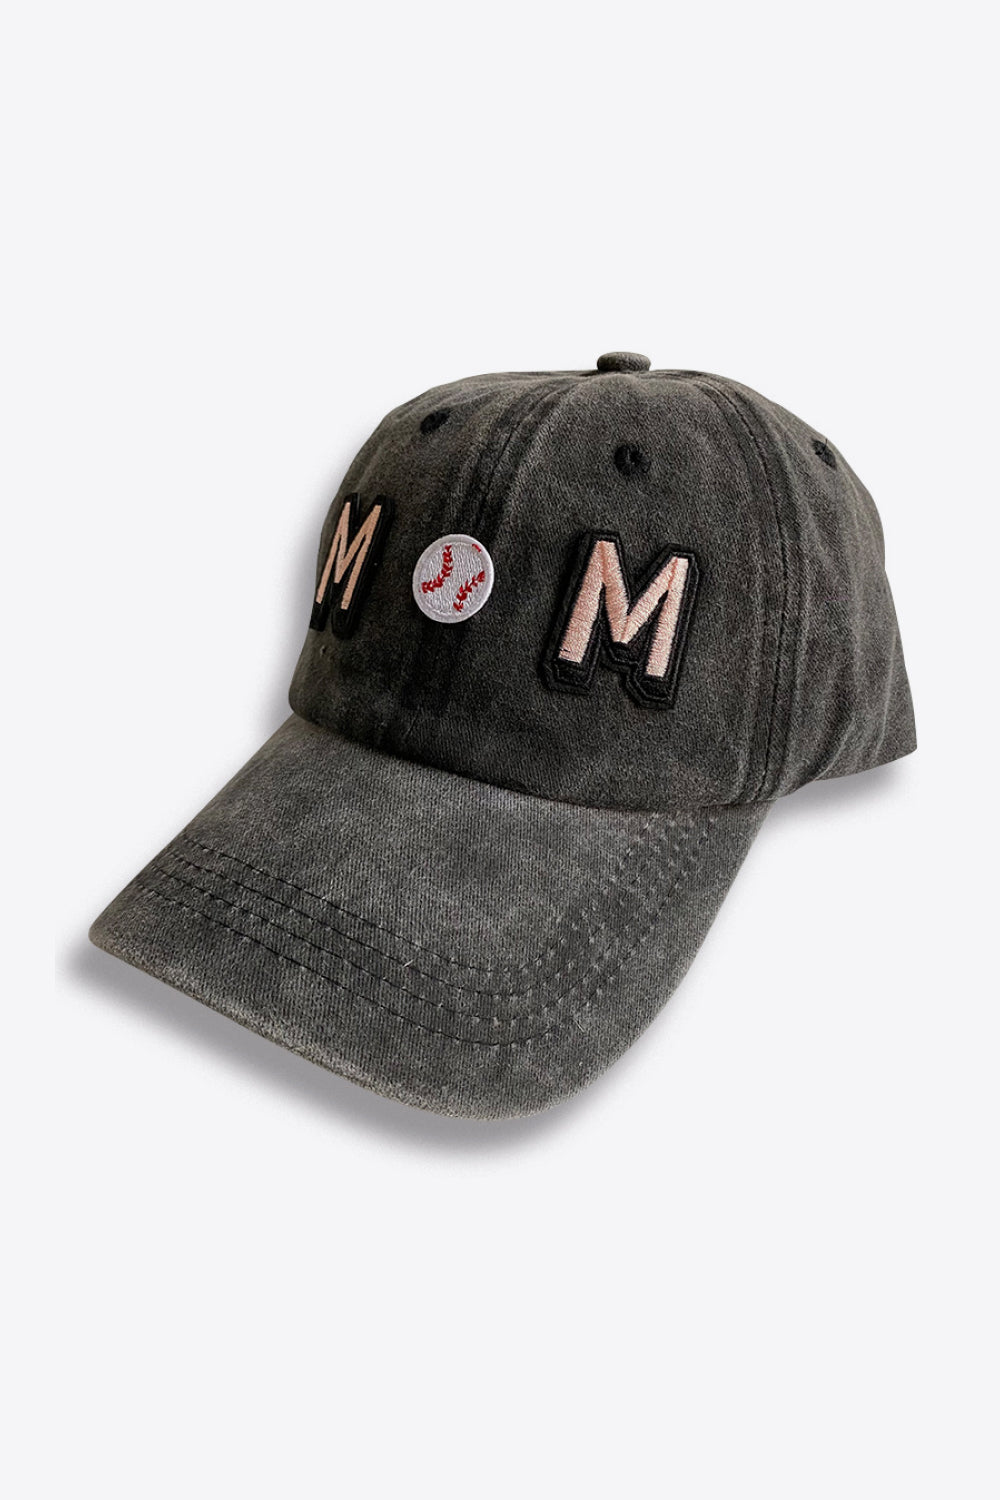 Graphic MOM baseball cap